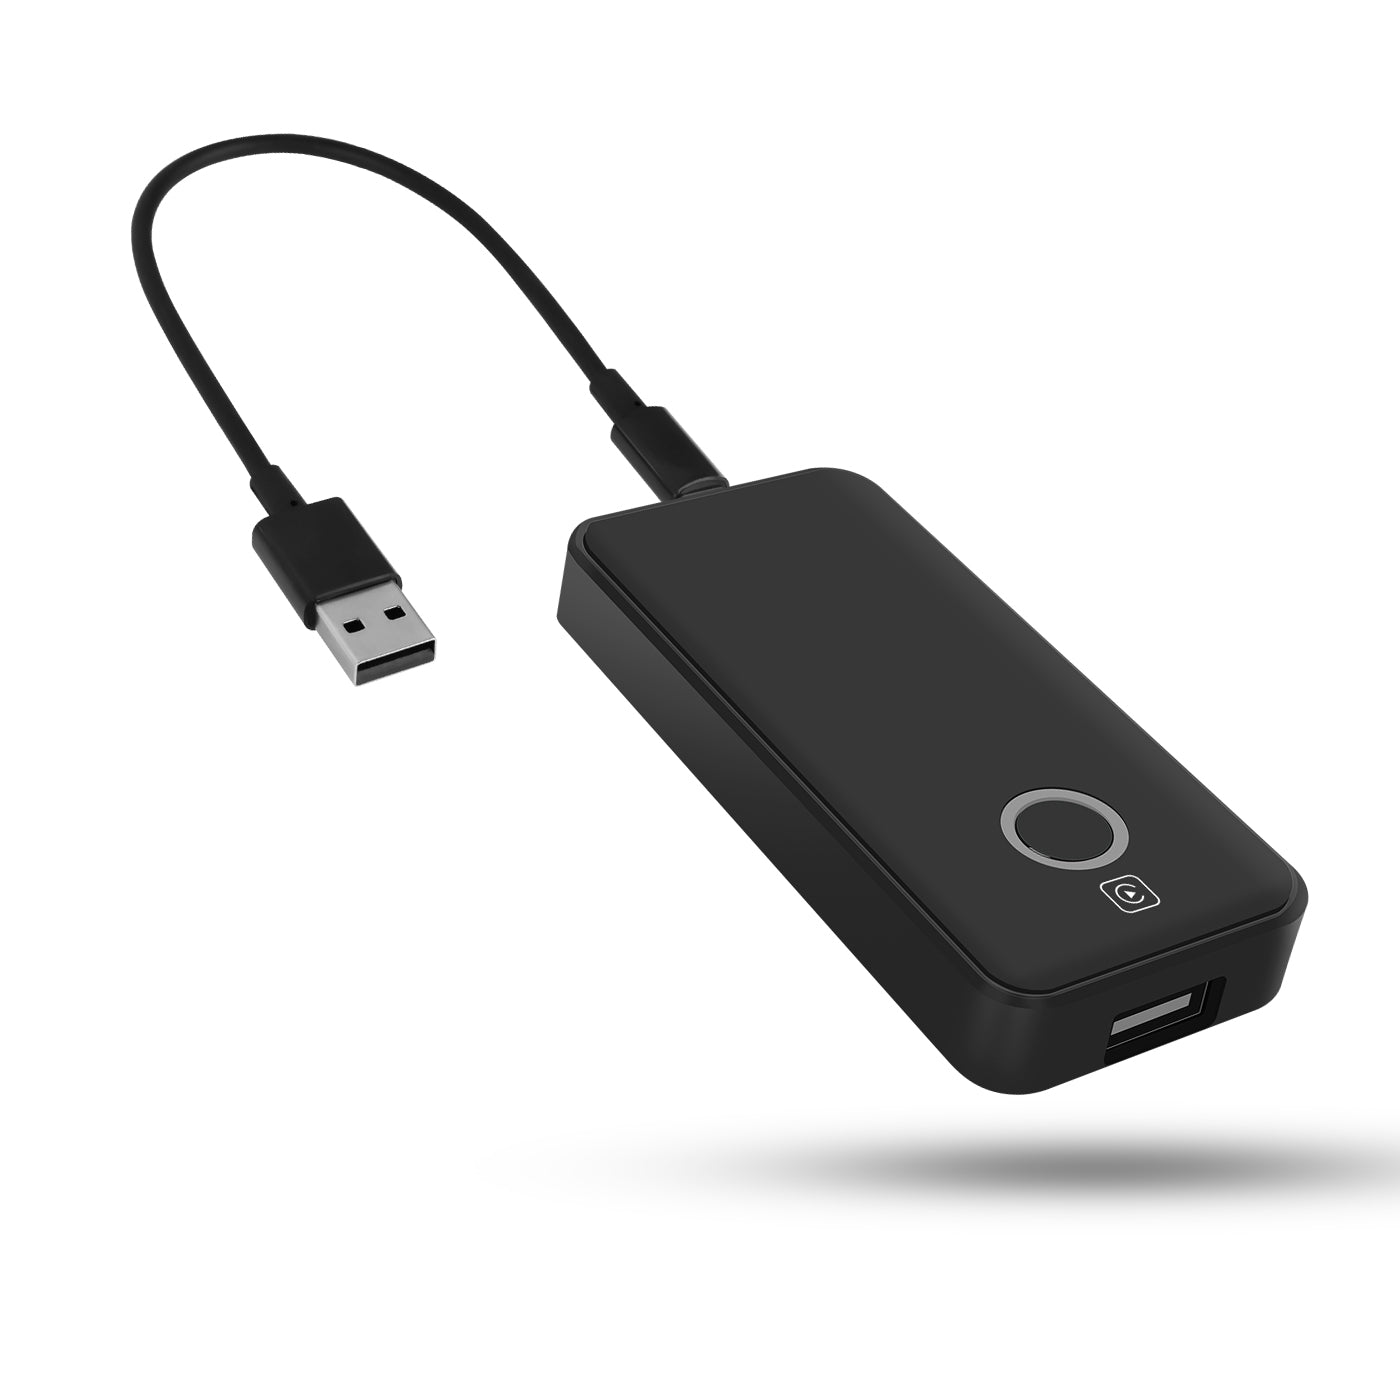 PODOFO 2023 Wired CarPlay to Wireless Apple CarPlay Ai Box Adapter USB